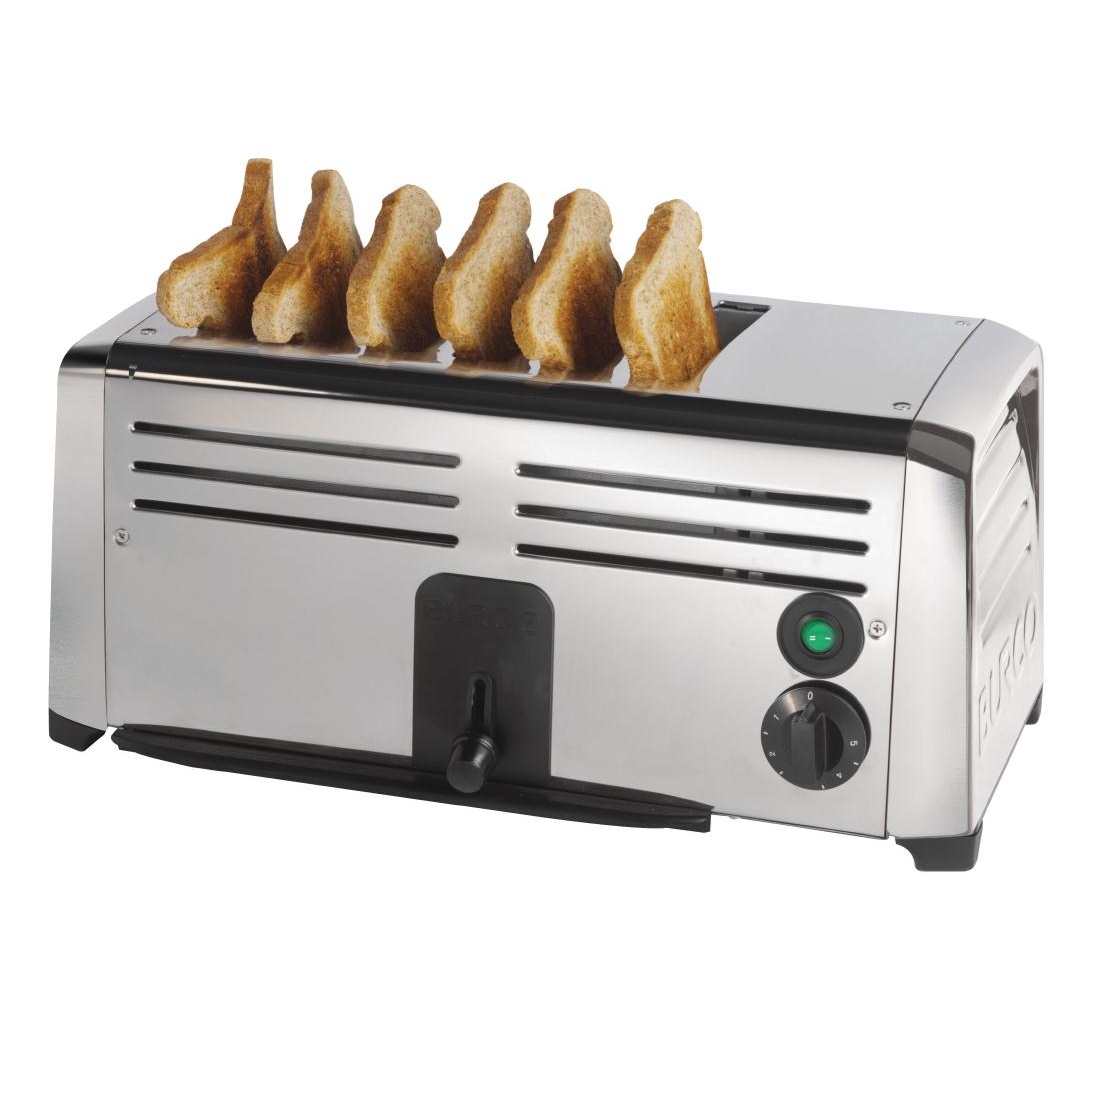 Burco Commercial 6 Slice Toaster TSSL16/STA